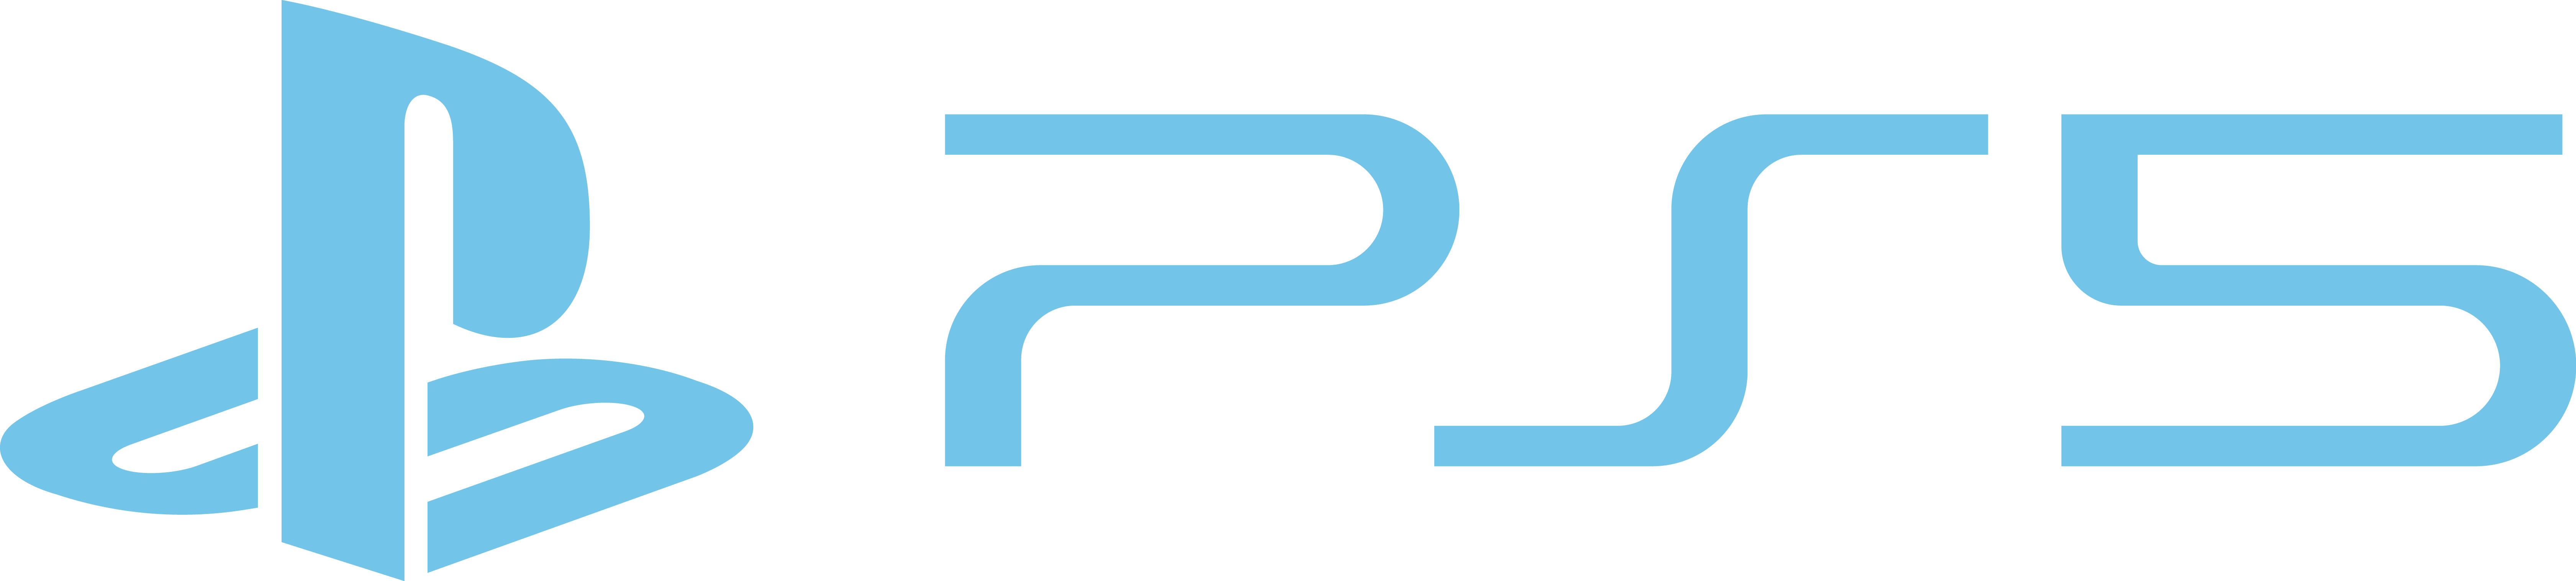 playstation-5-logo